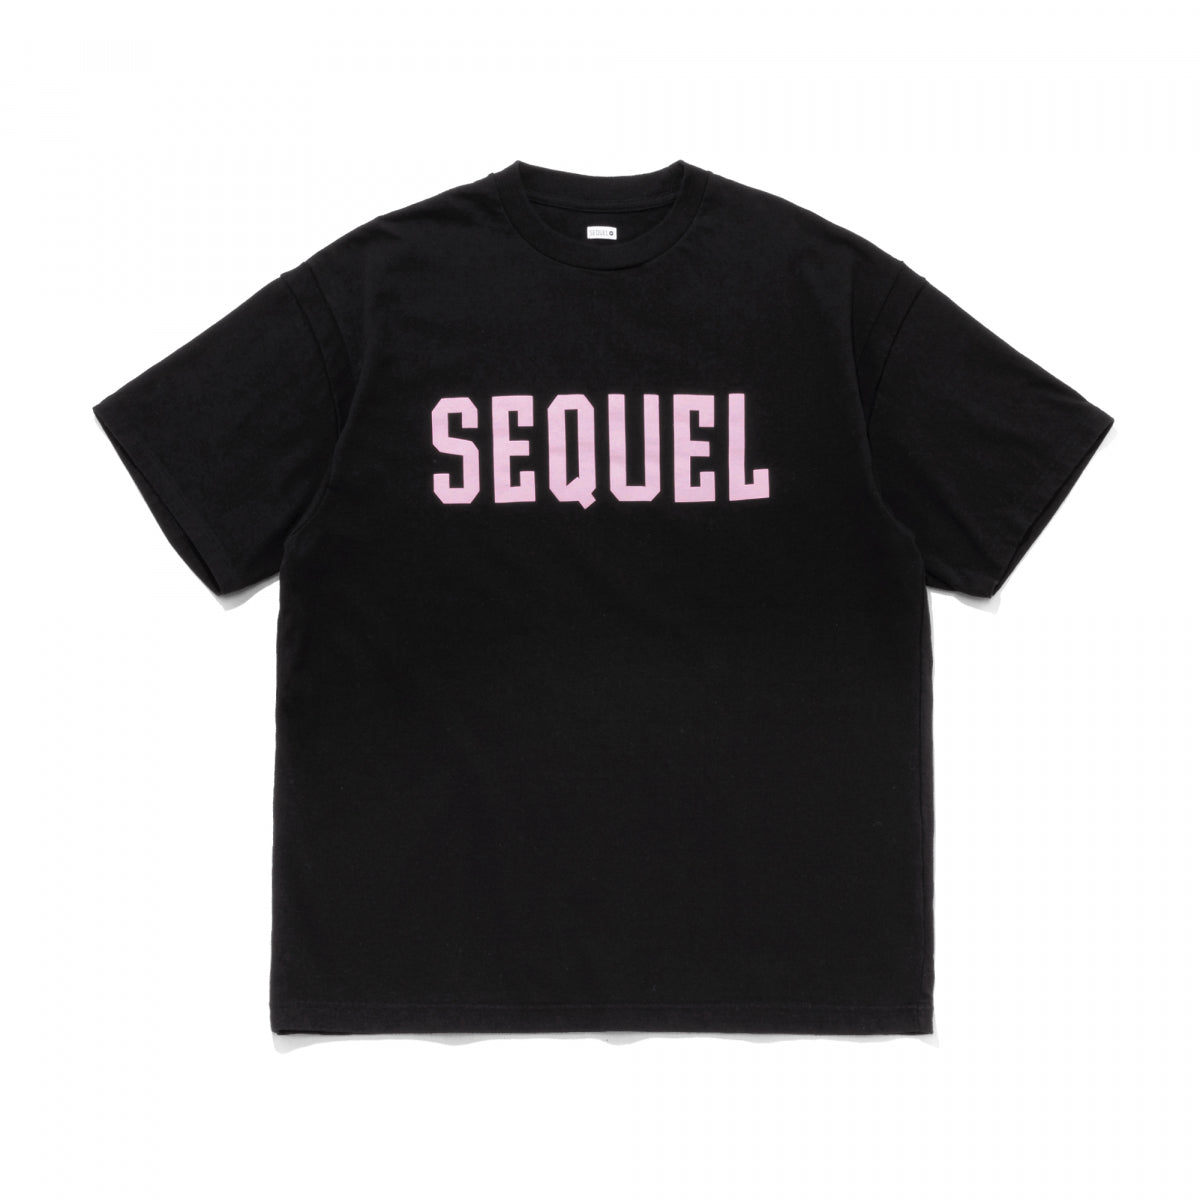 WEEKEND SEQUEL x FRAGMENT Tシャツ ブラック XLCOLO - トップス